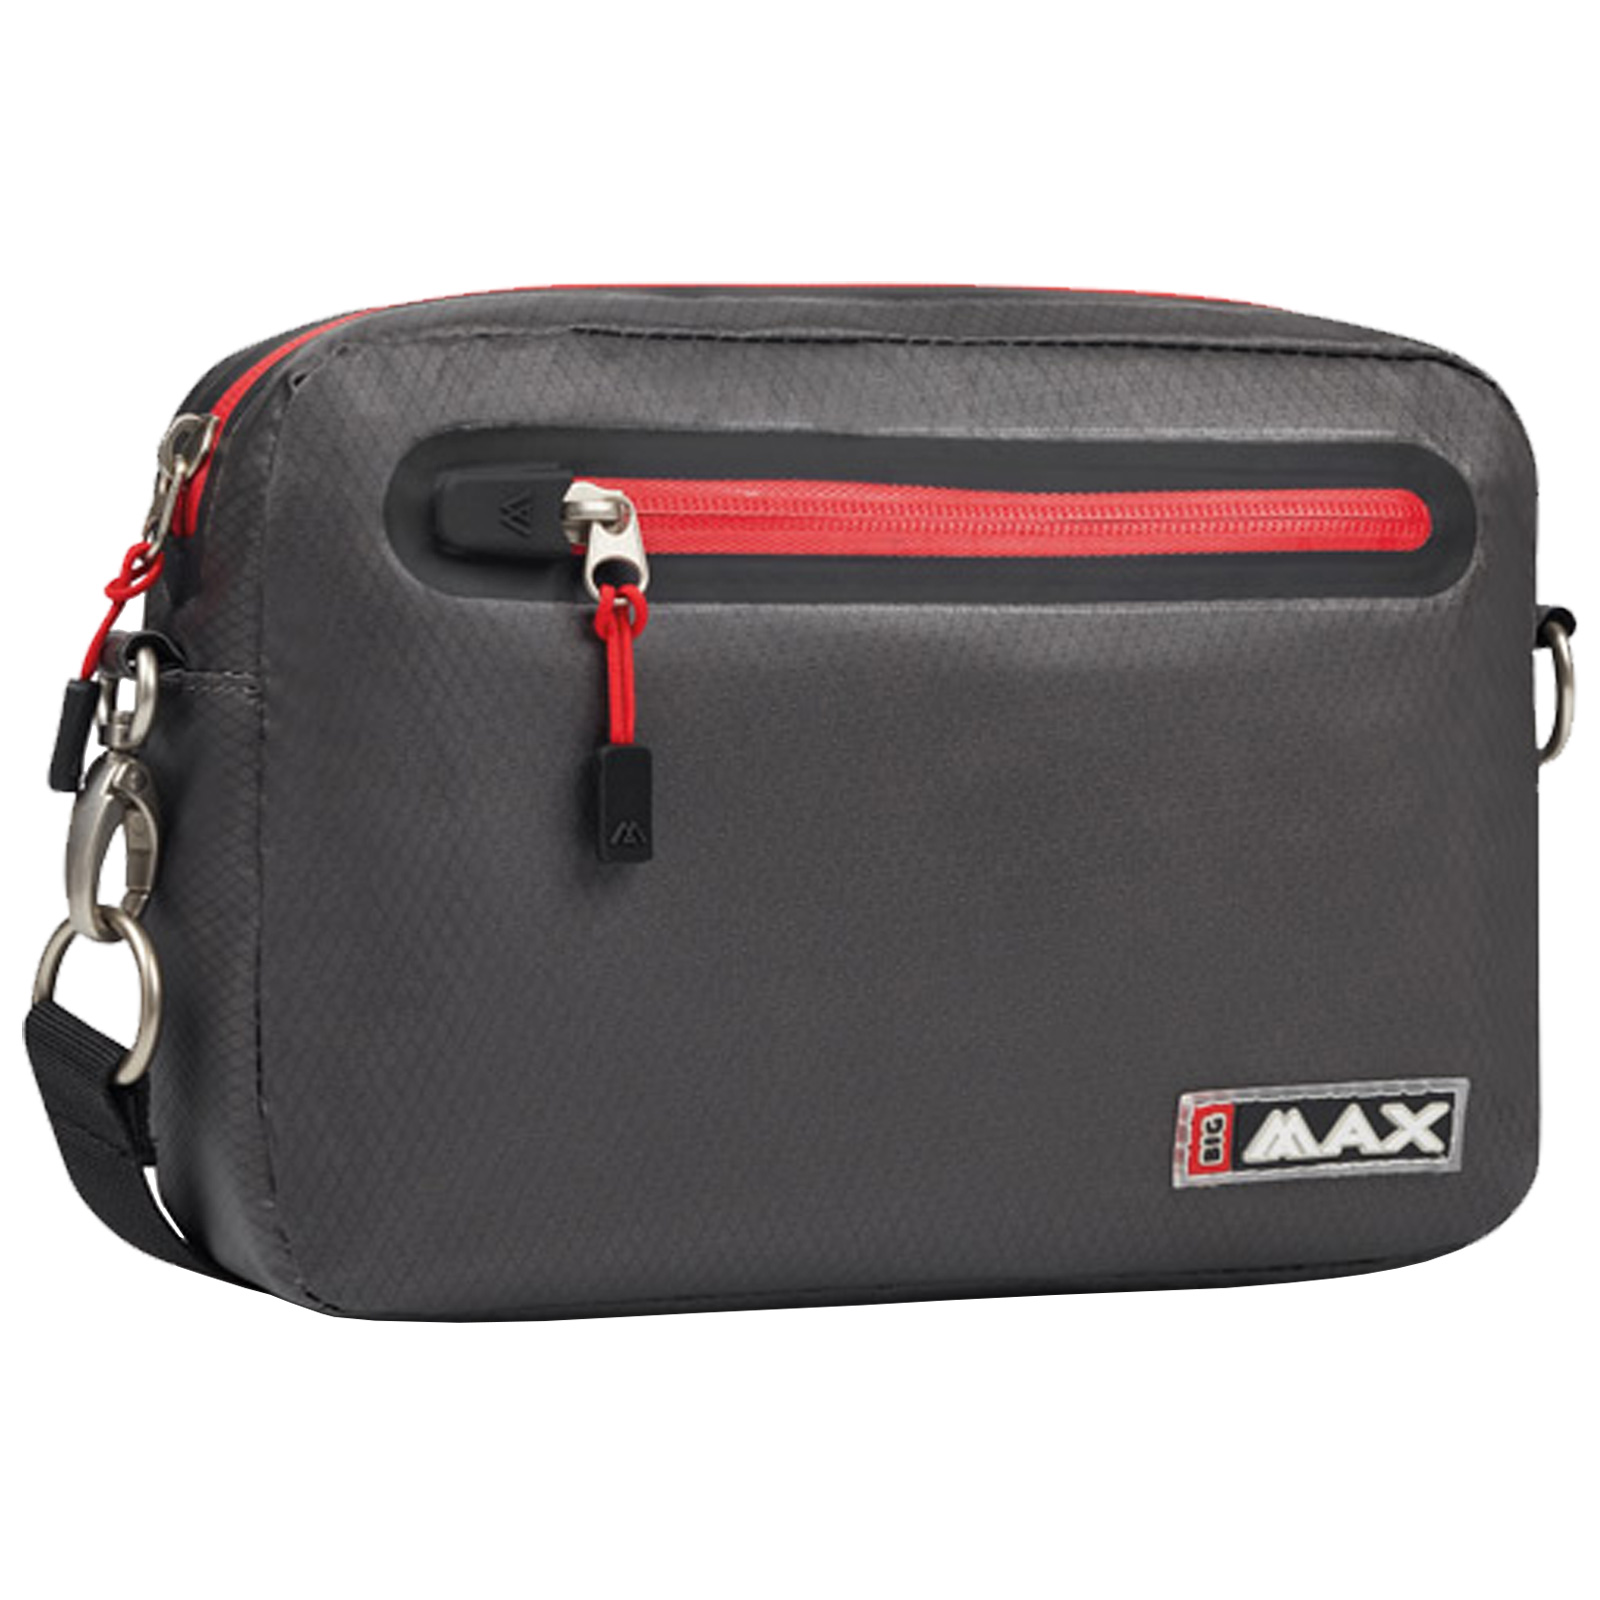 Big Max Aqua Valuables Waterproof Accessories Pouch Golf Storage Bag